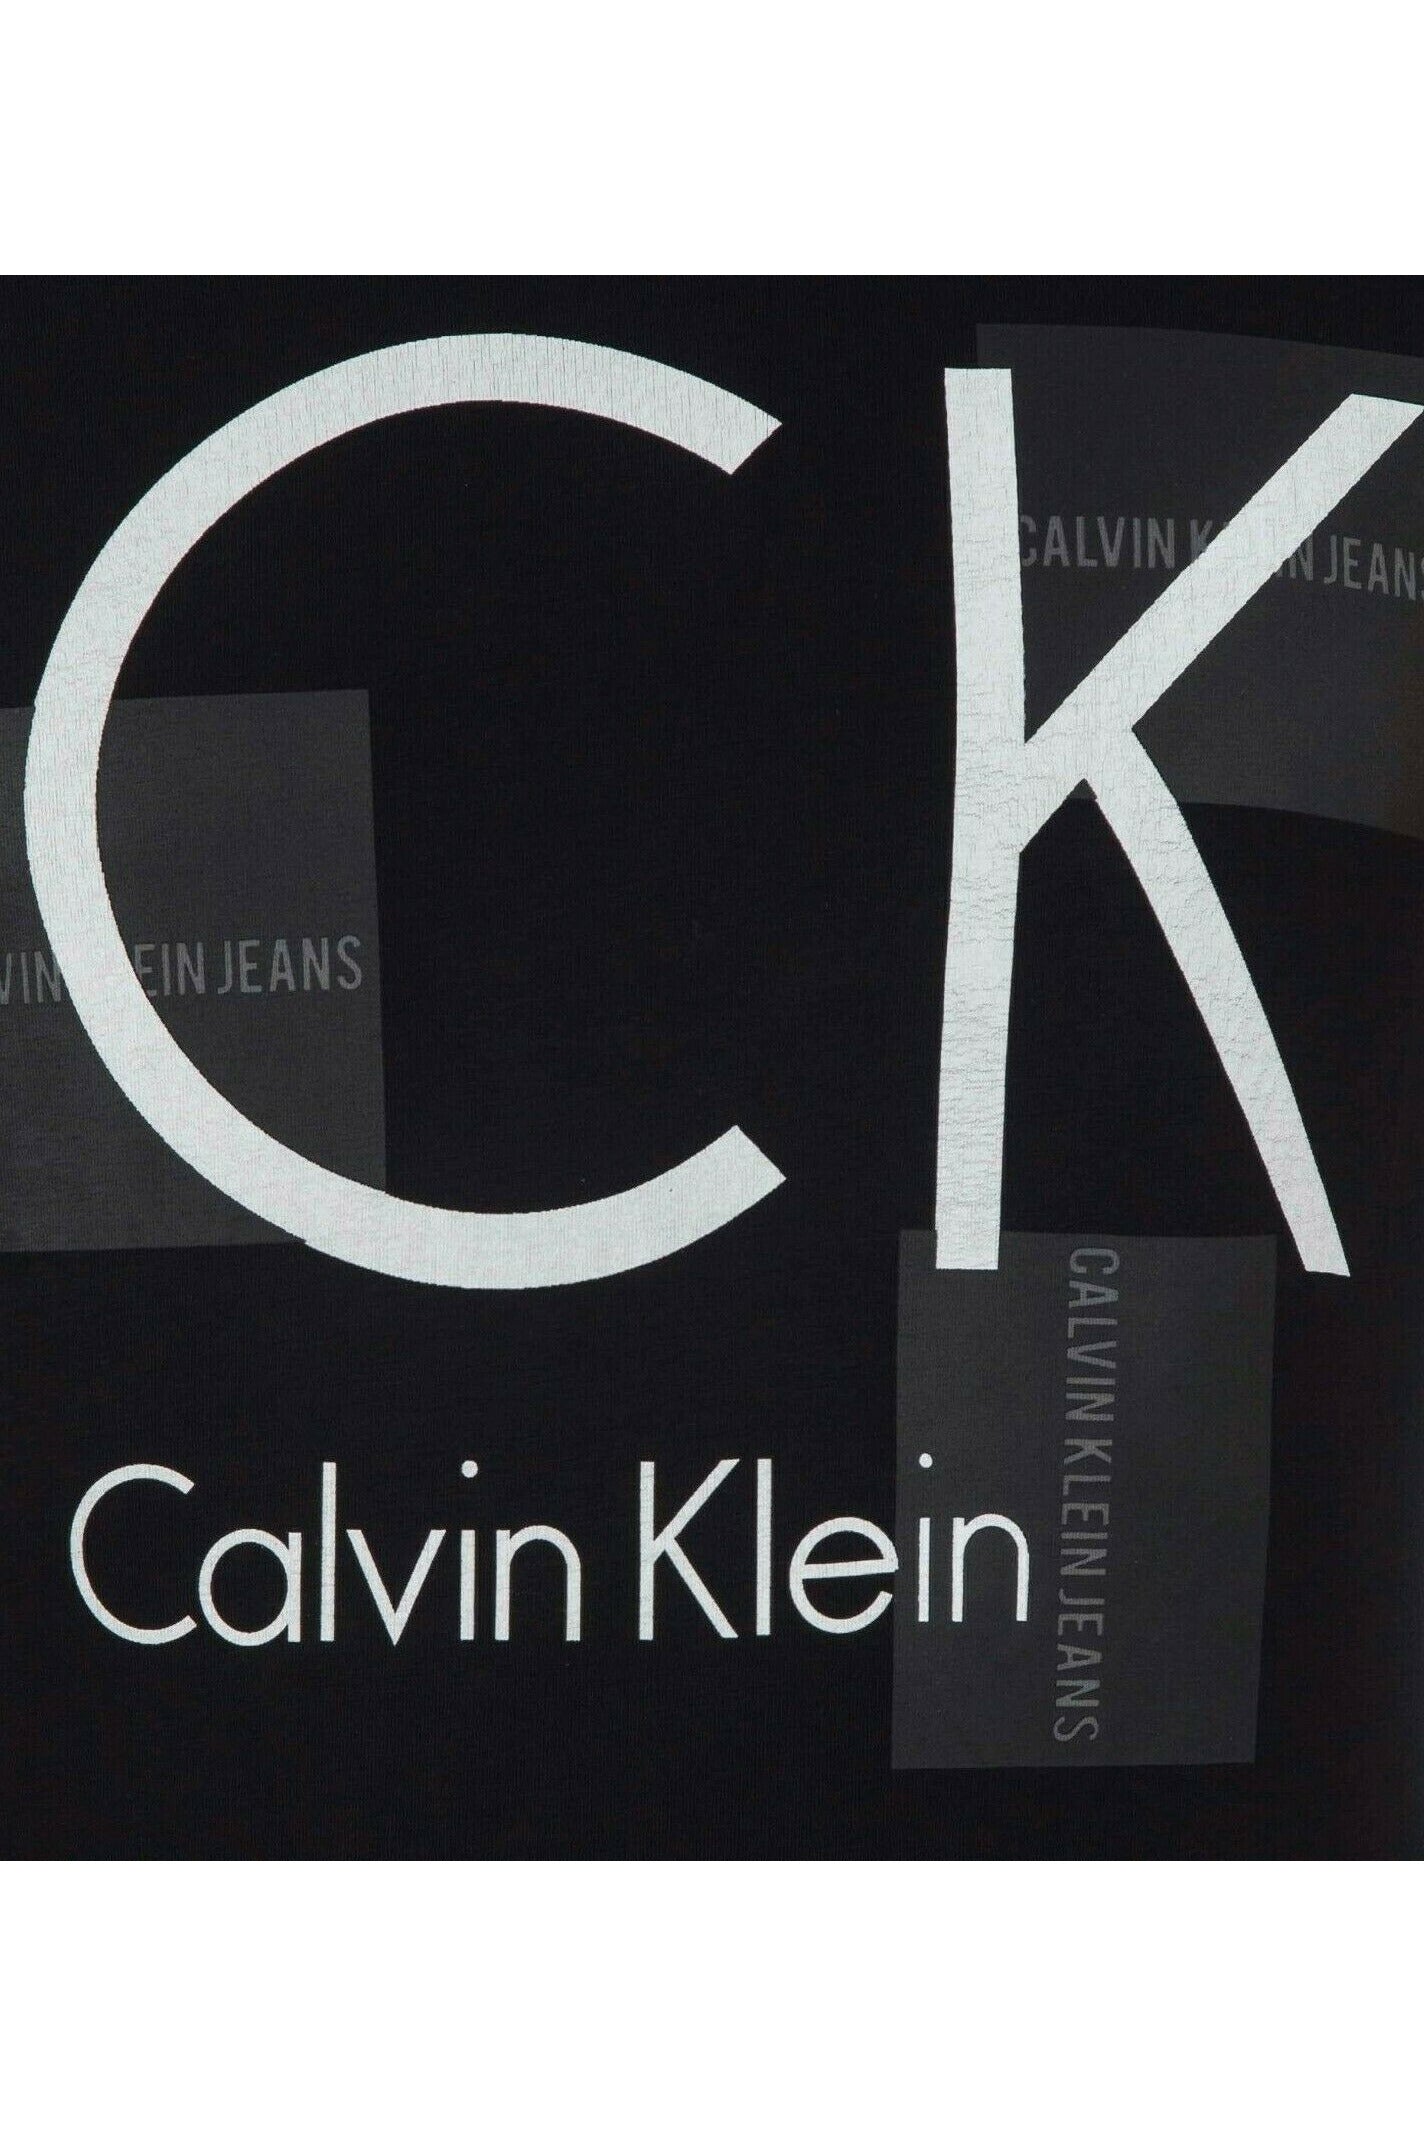 Calvin Klein Black Men's T-Shirt 100% Cotton